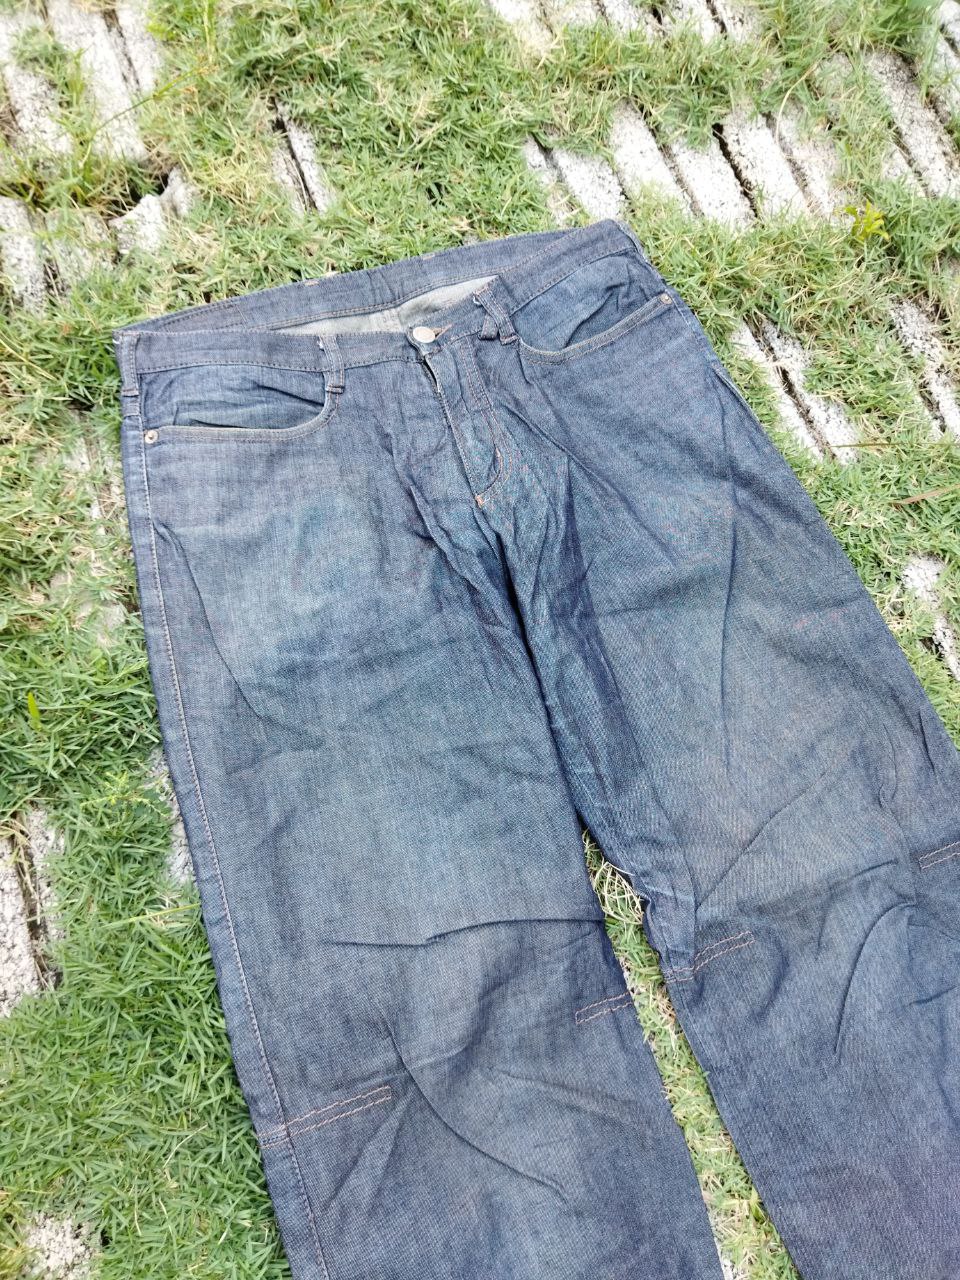 Vintage Neil Barrett Zipper Jeans - 3